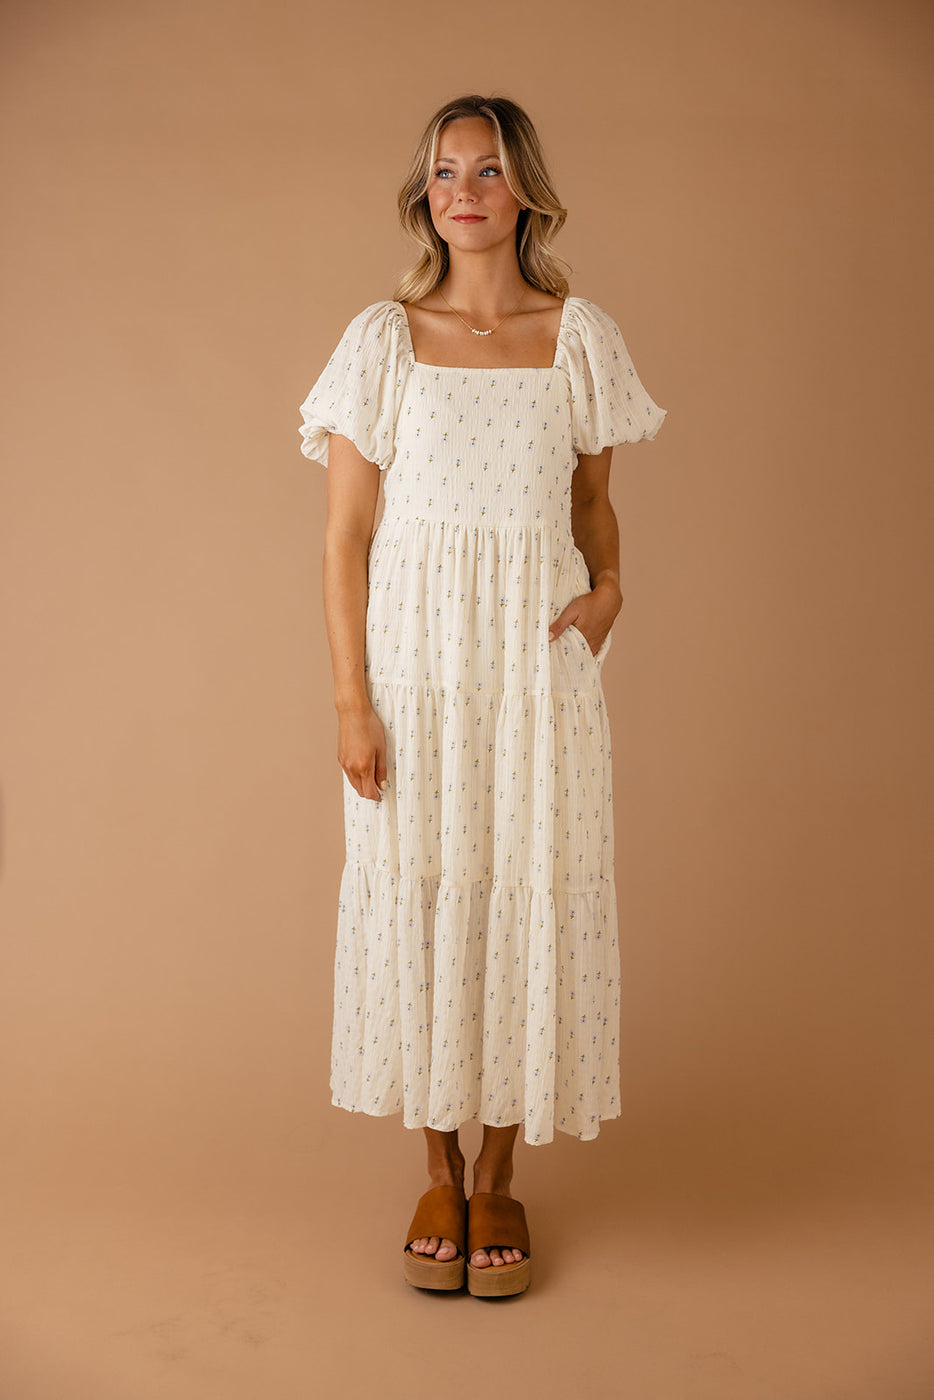 a woman in a white dress